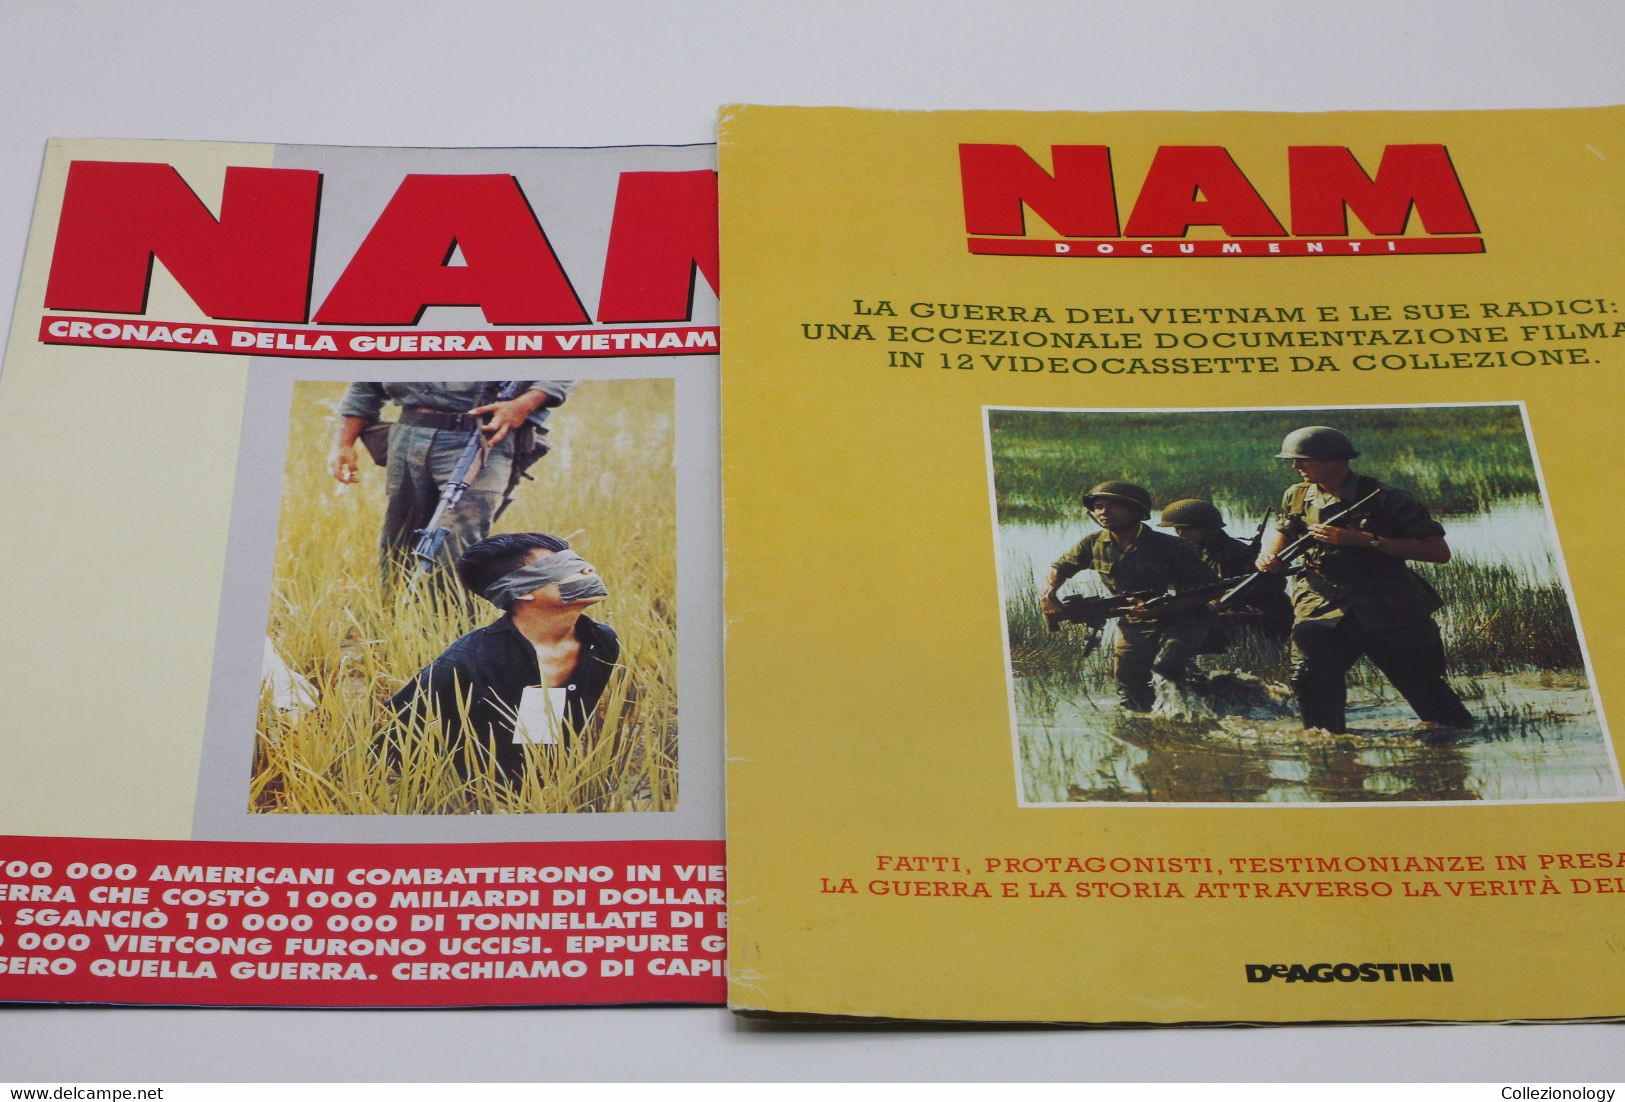 NAM CRONACA DELLA GUERRA IN VIETNAM 1965-1975  #1 DE AGOSTINI ATLAS 1998 CON POSTER Chronicle Of Vietnam War Guerre - Italien